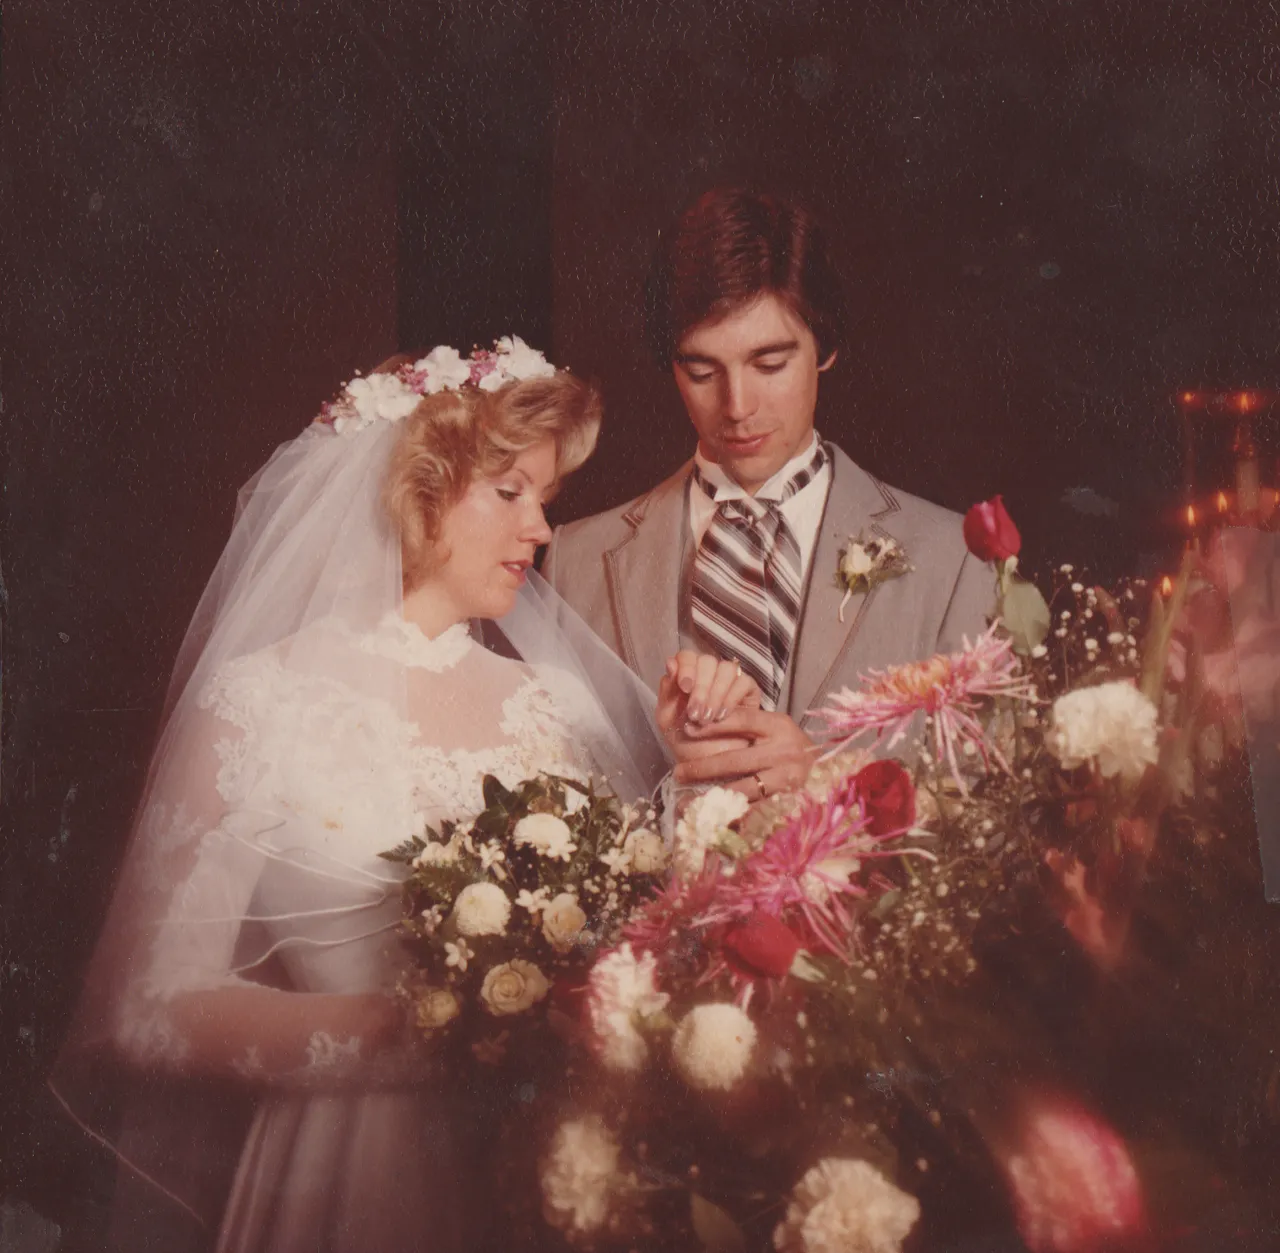 1984 - Brian & Lori Morehead's wedding photo.png